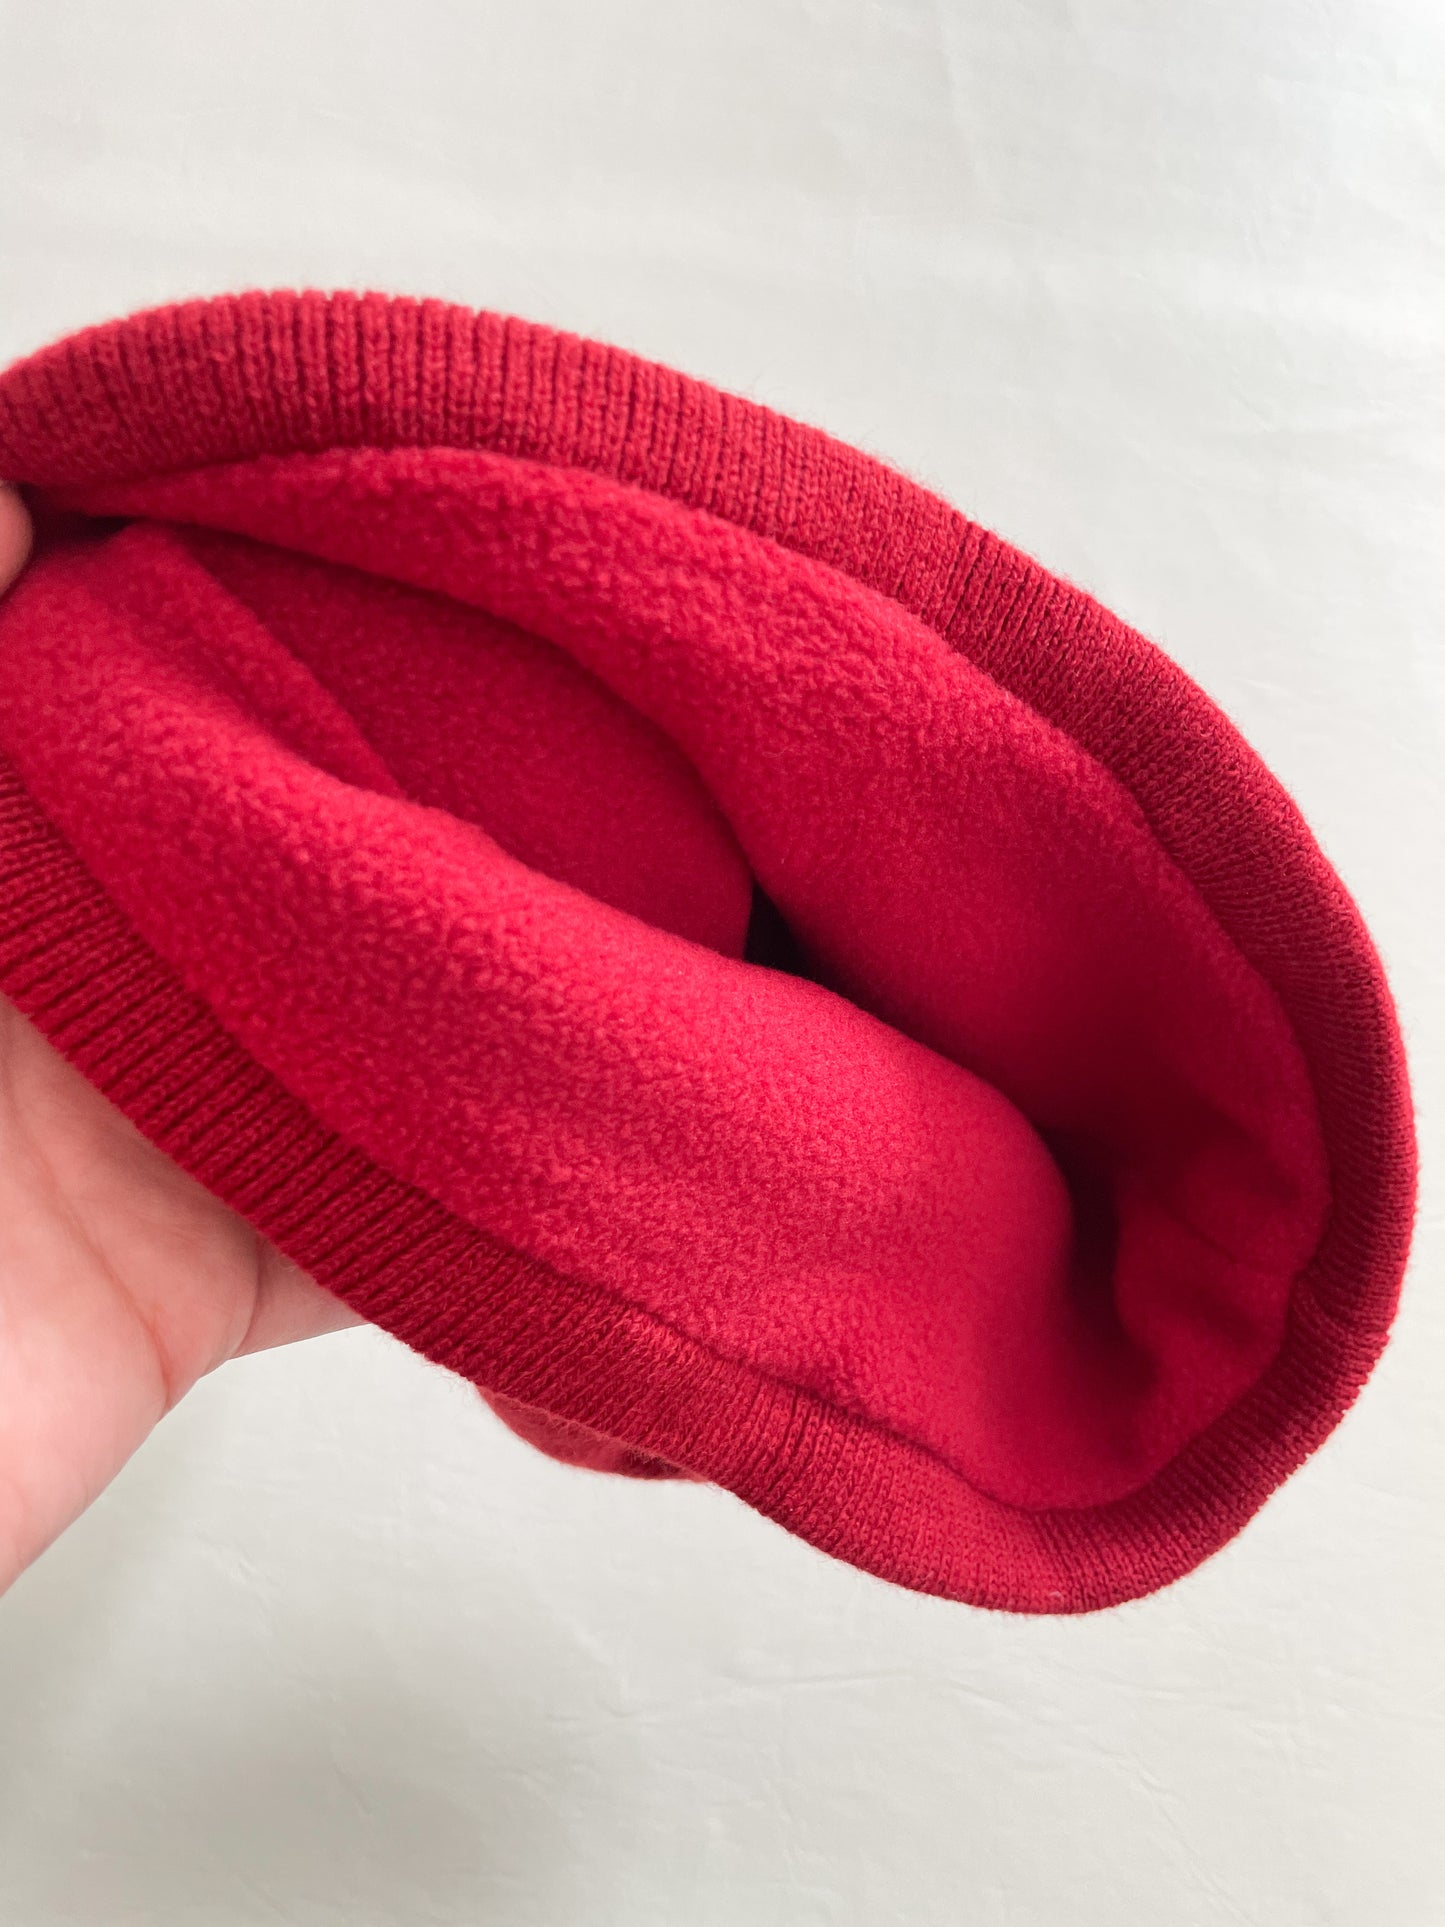 Kootenay Red Canada Fleece Lined Beanie Hat NWT